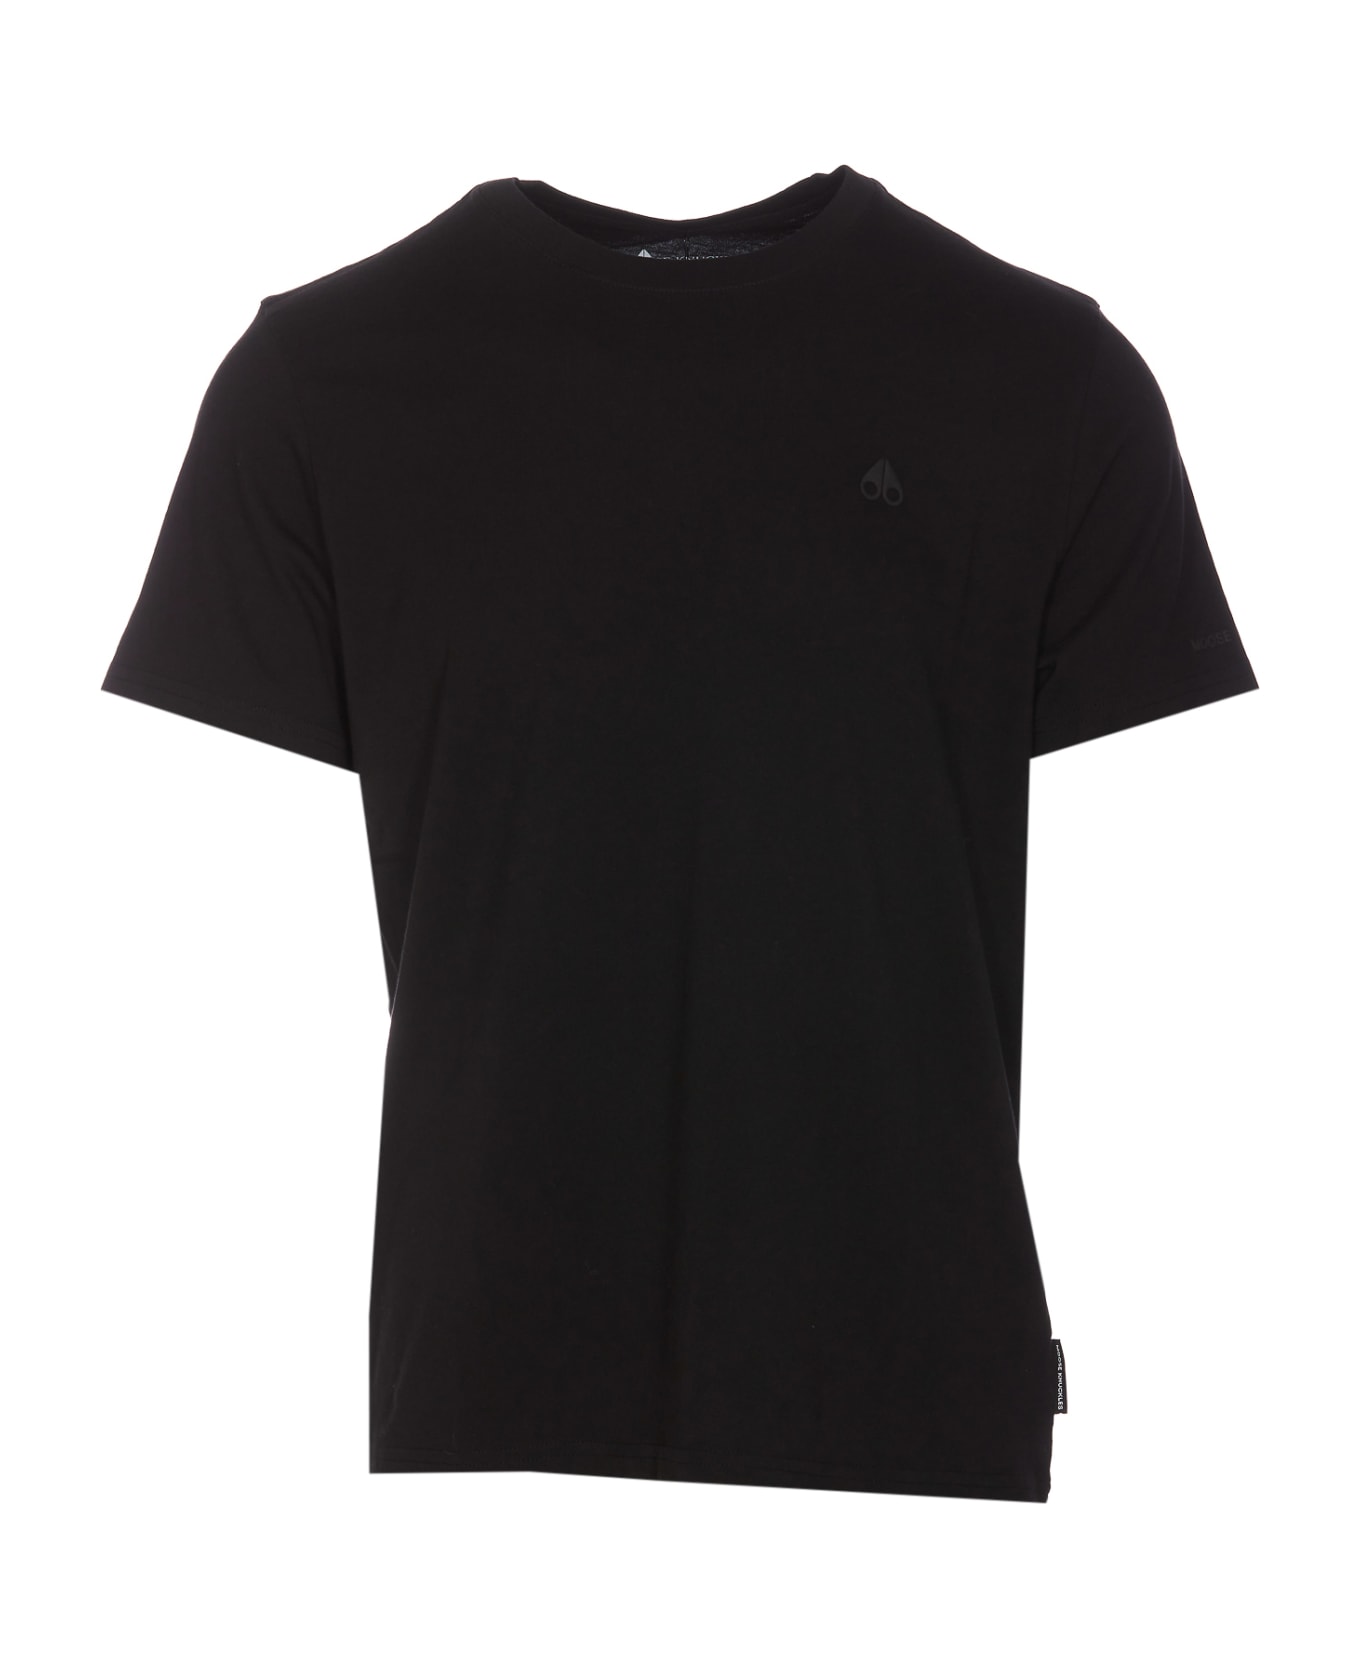 Moose Knuckles Satellite T-shirt - Black シャツ